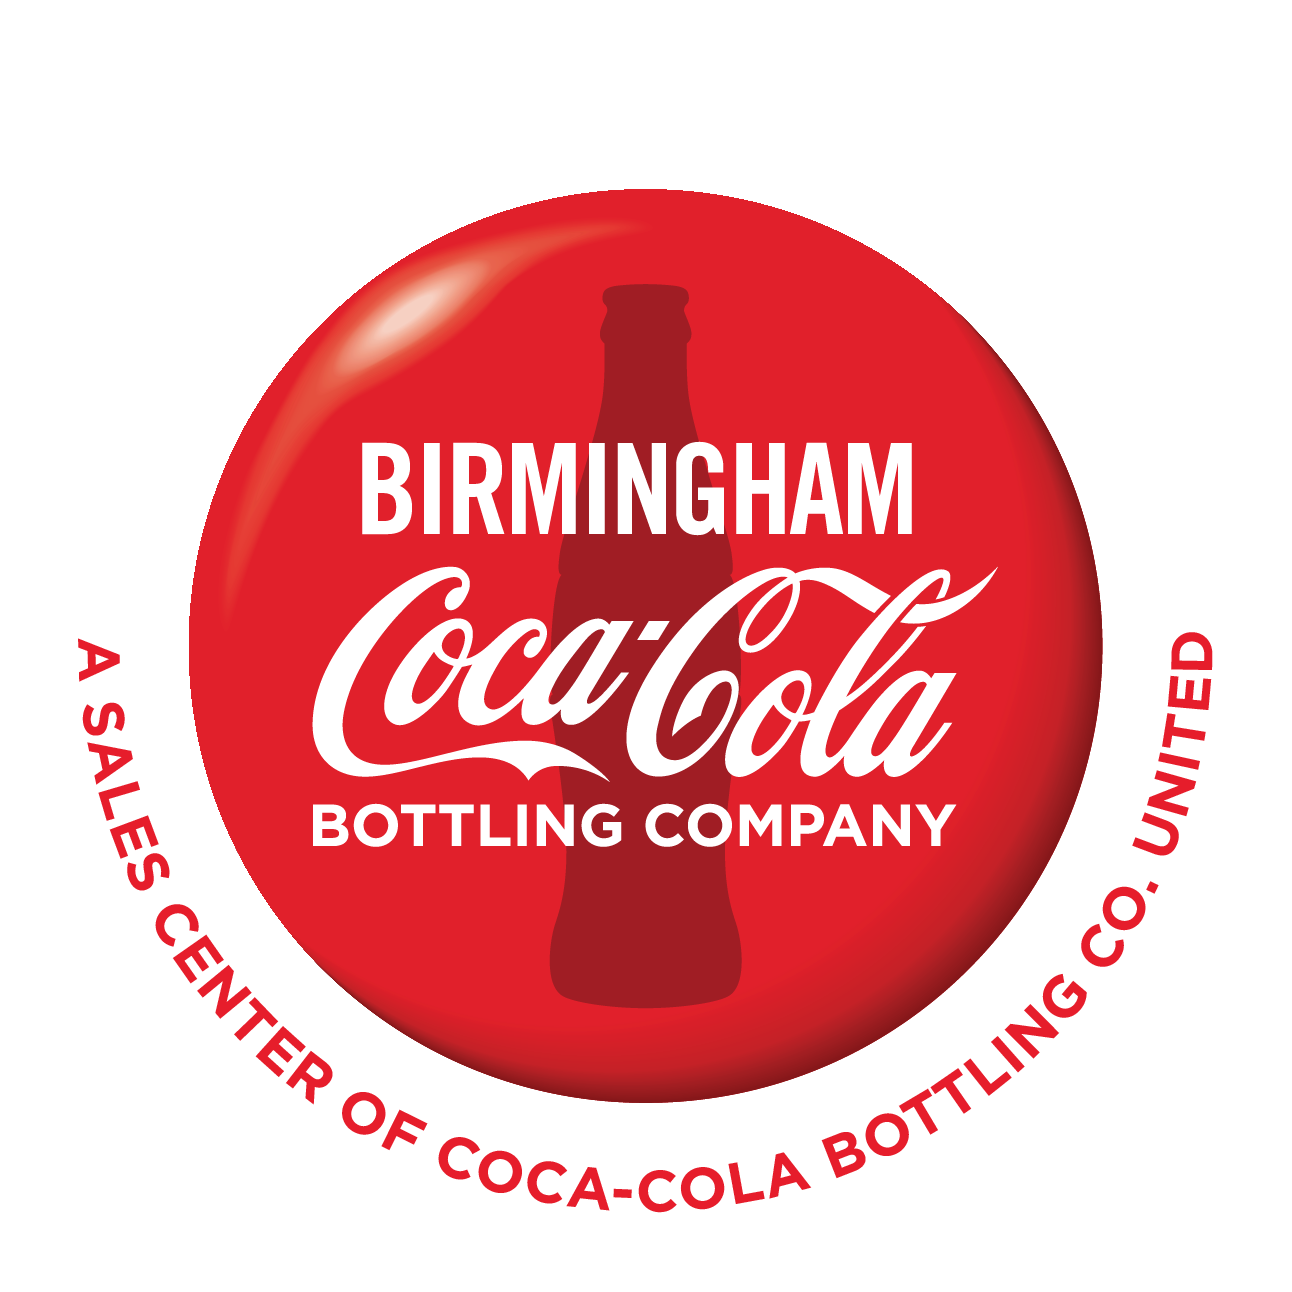 Birmingham Coca-Cola Bottling Comapny